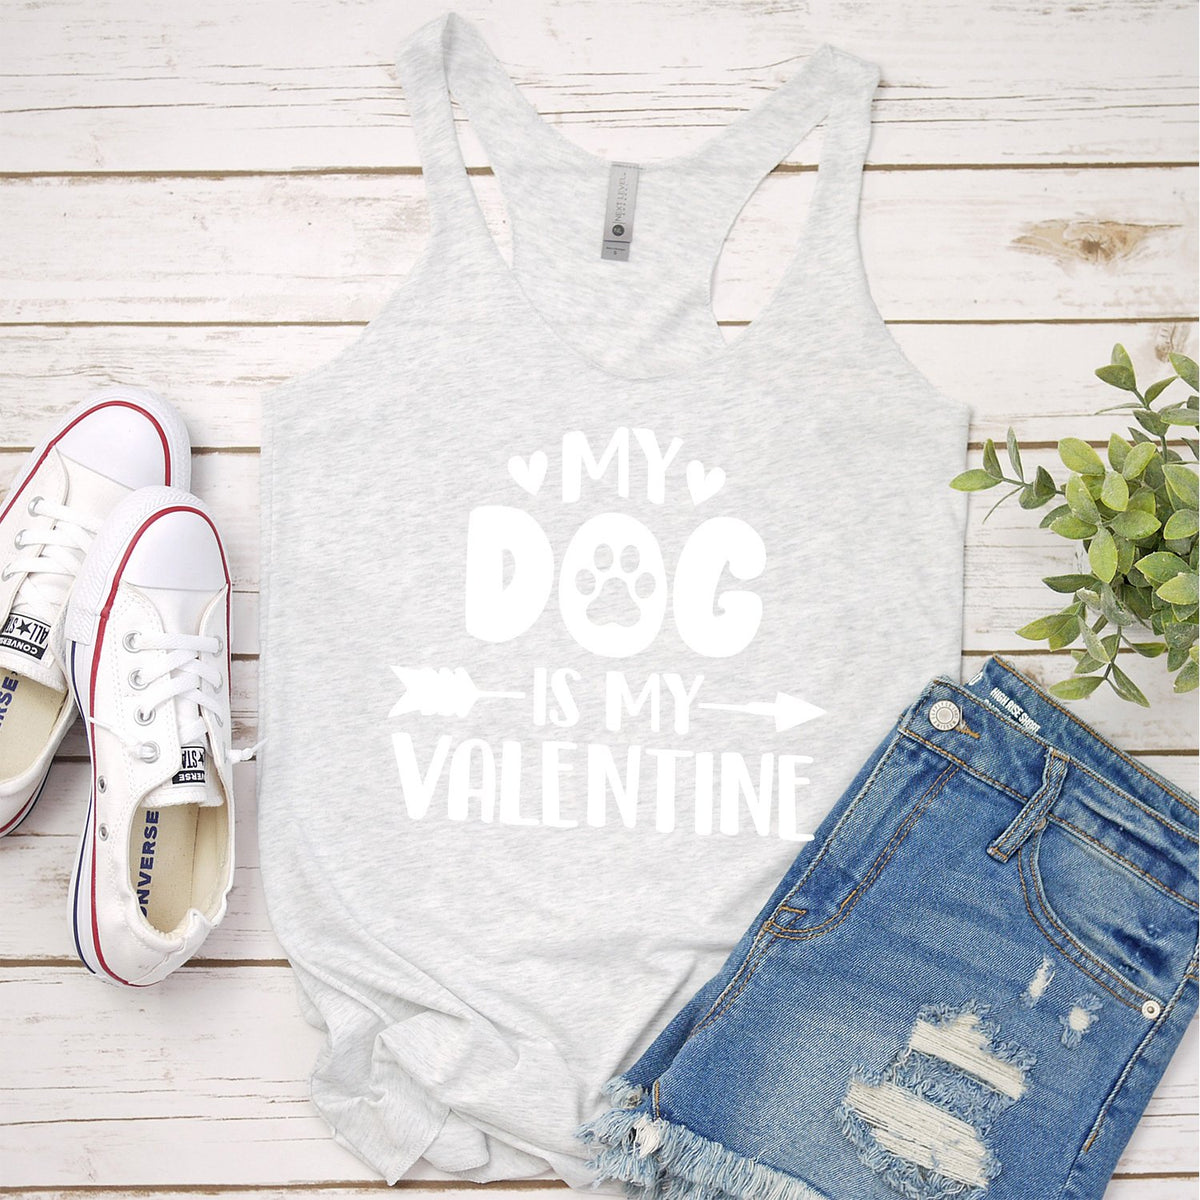 My Dog Is My Valentine - Tank Top Racerback